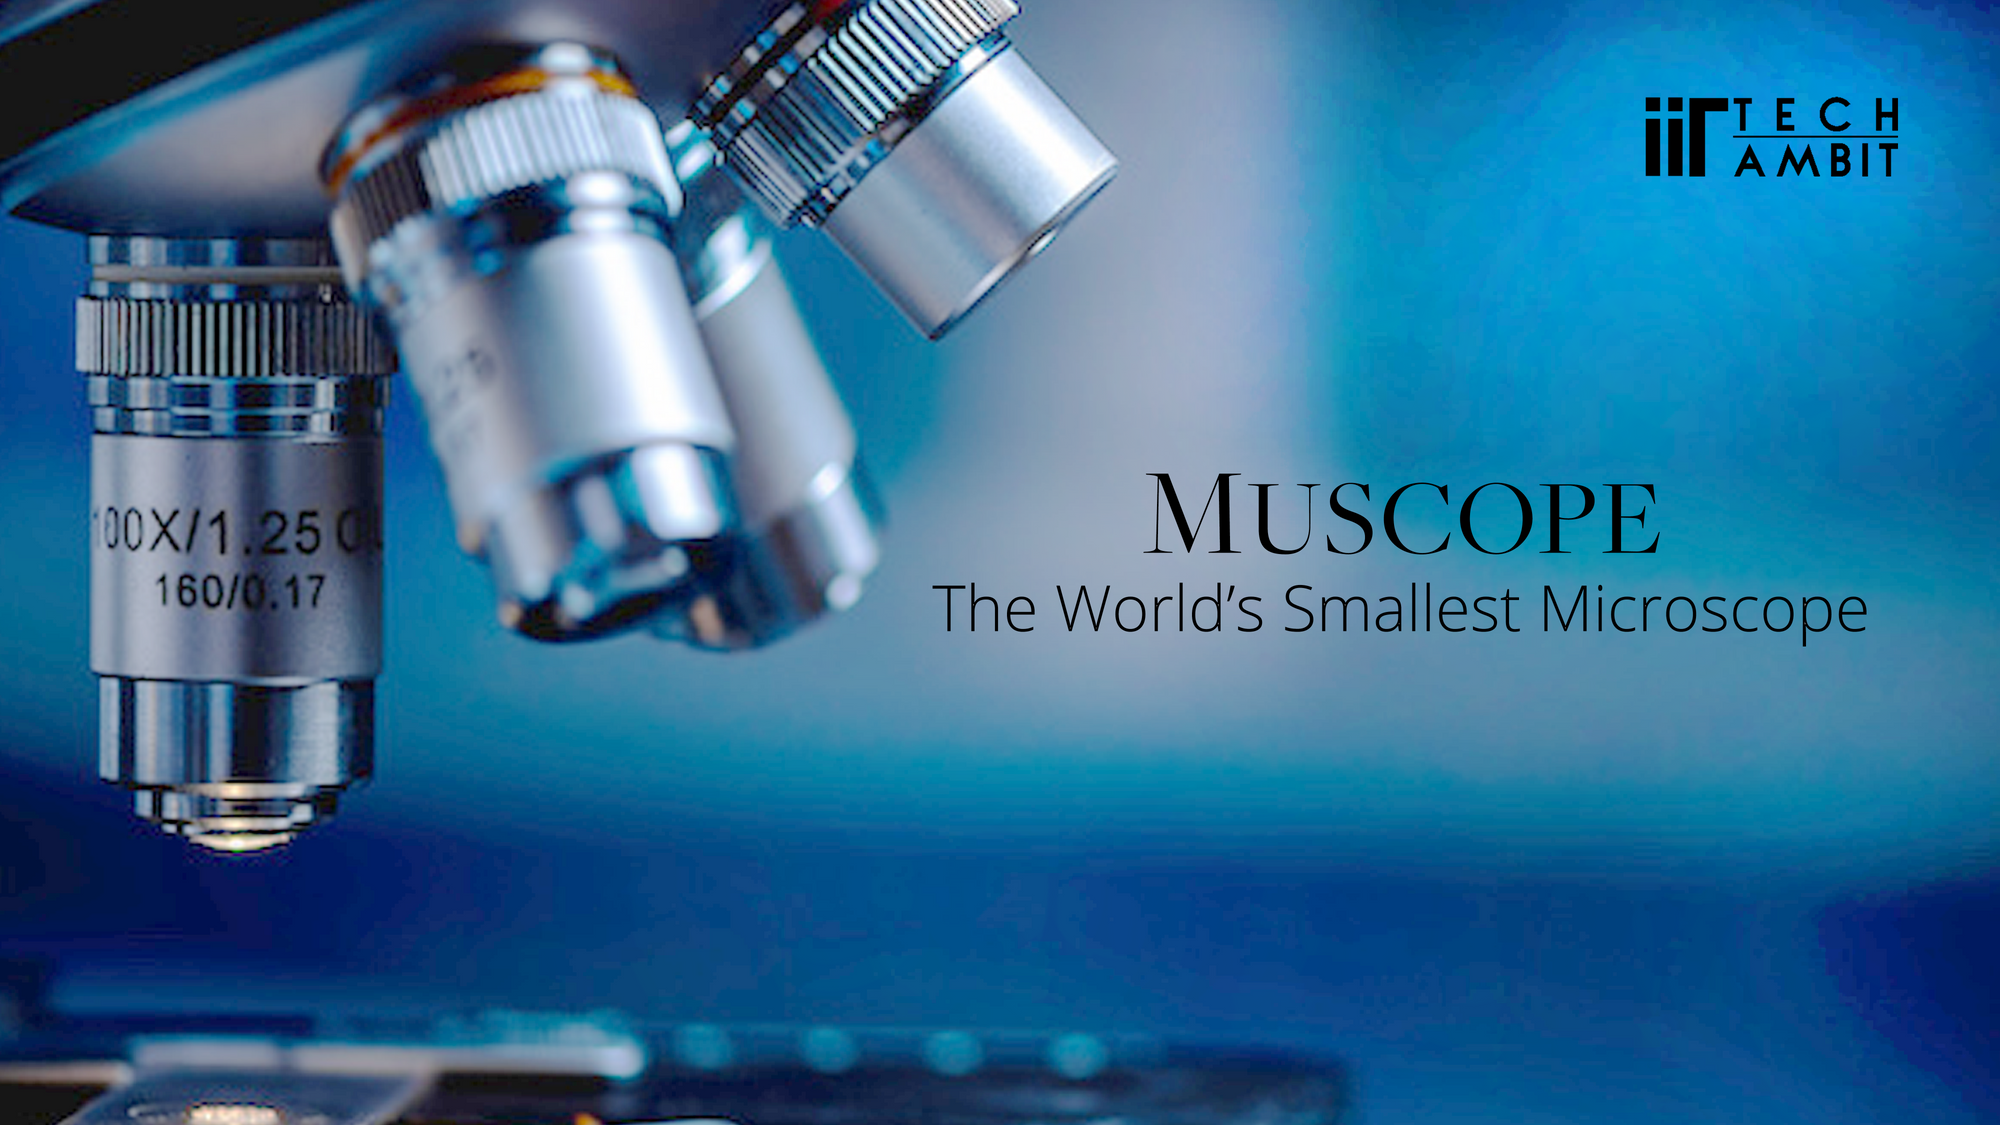 Muscope: The world's smallest microscope